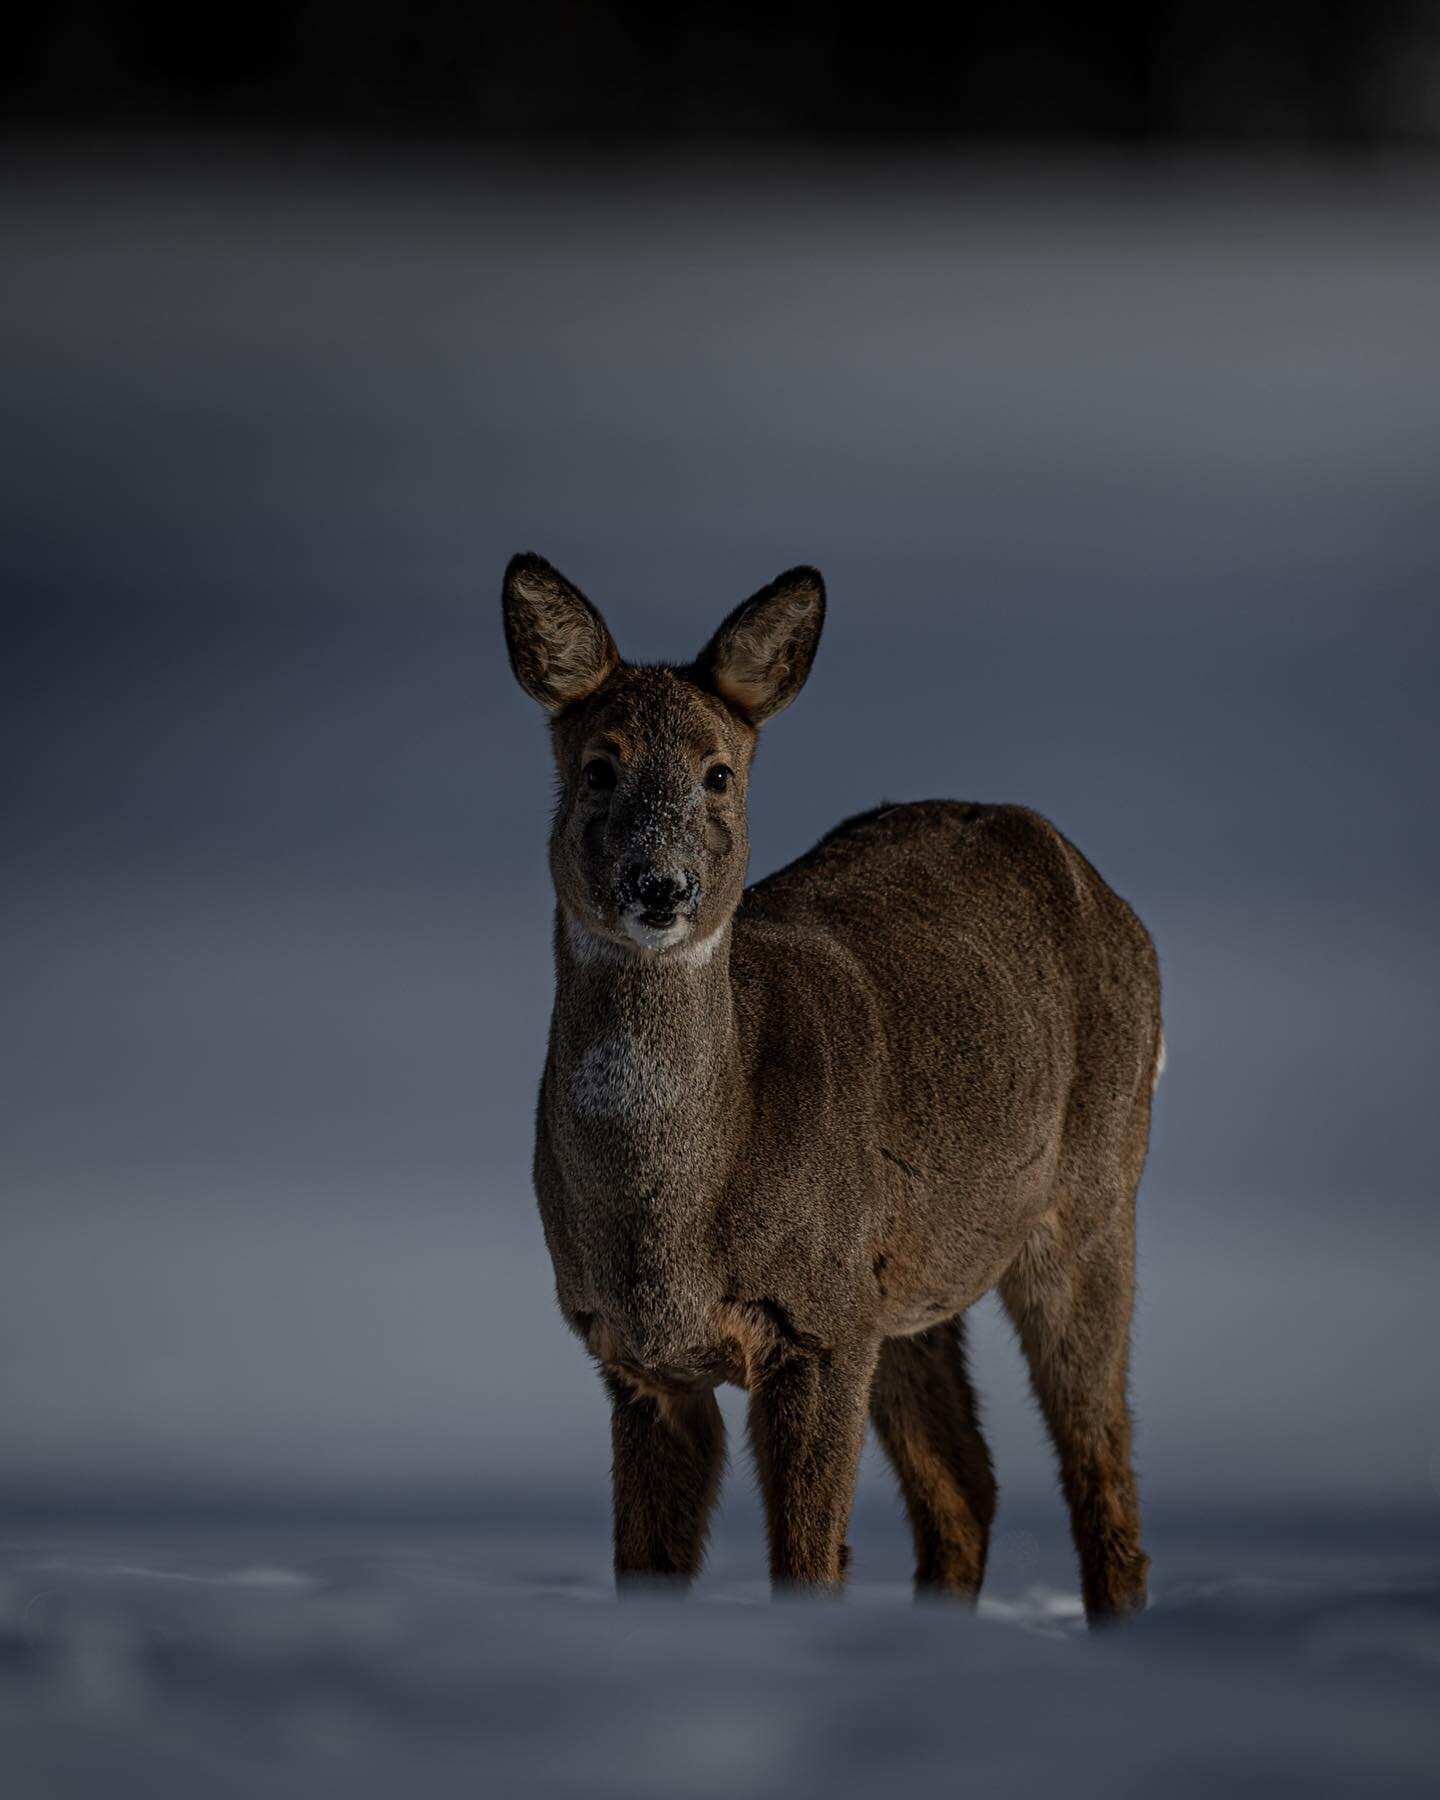 Roe Deer .. 
.
.
.
#igscwildlife #roedeer #winterphotography #natures_moods #naturelovers #boredpanda #bokeh_addicts #suomenluonto #visitfinland #luontokuvaus #nature_brilliance #nature_perfection #raw_community #instaluontokuvaajat #canonnordic #raj